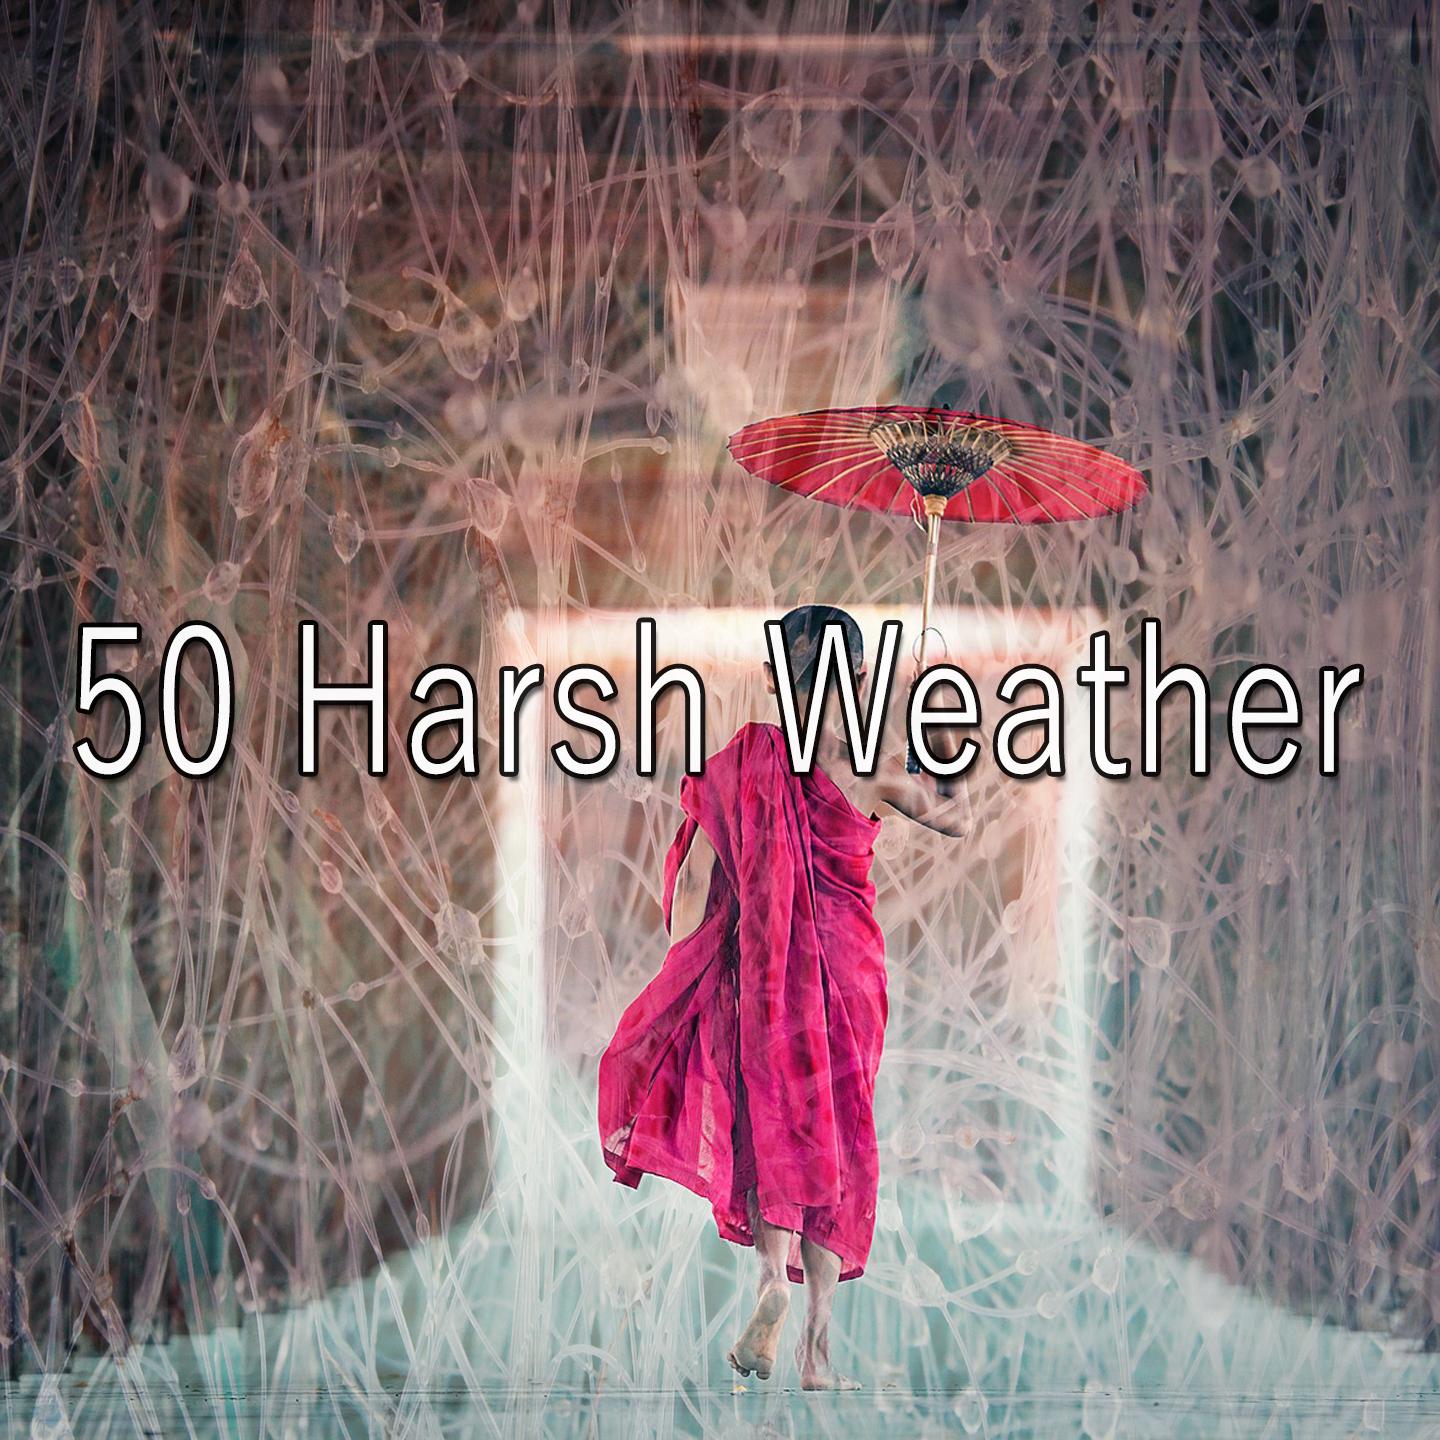 50 Harsh Weather